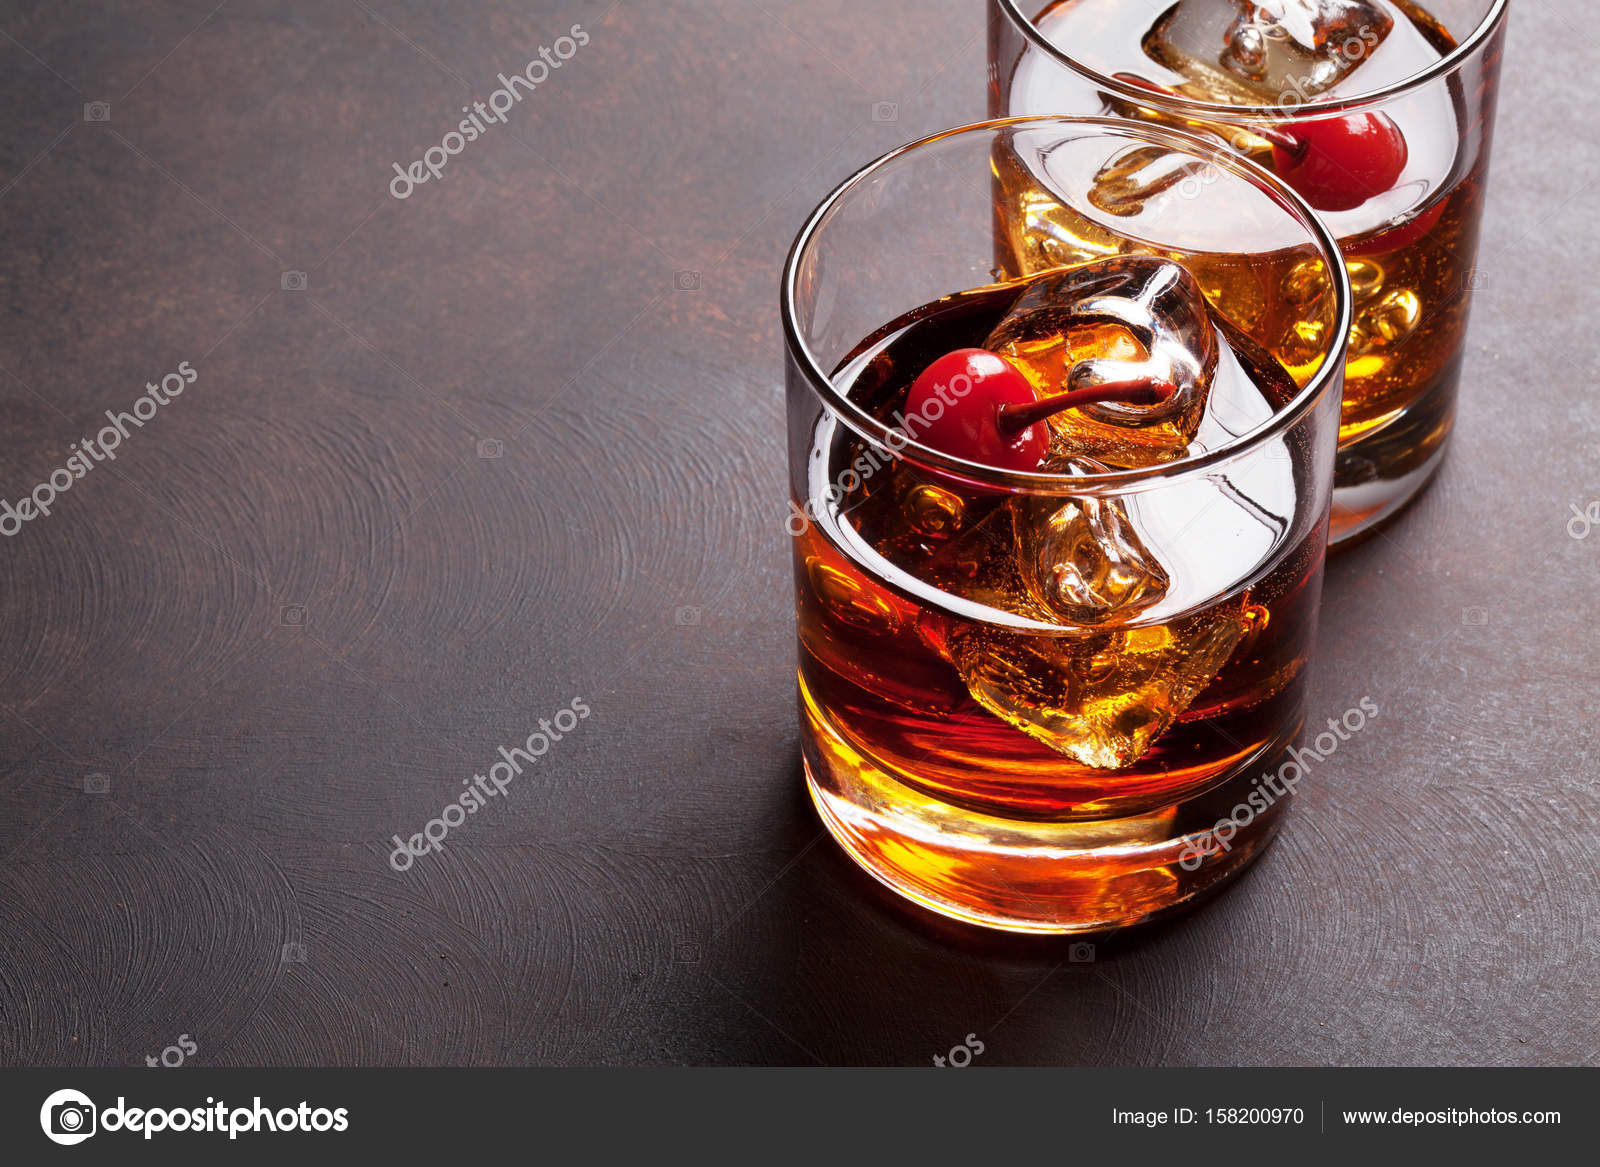 https://st3.depositphotos.com/1001069/15820/i/1600/depositphotos_158200970-stock-photo-manhattan-cocktail-glasses.jpg